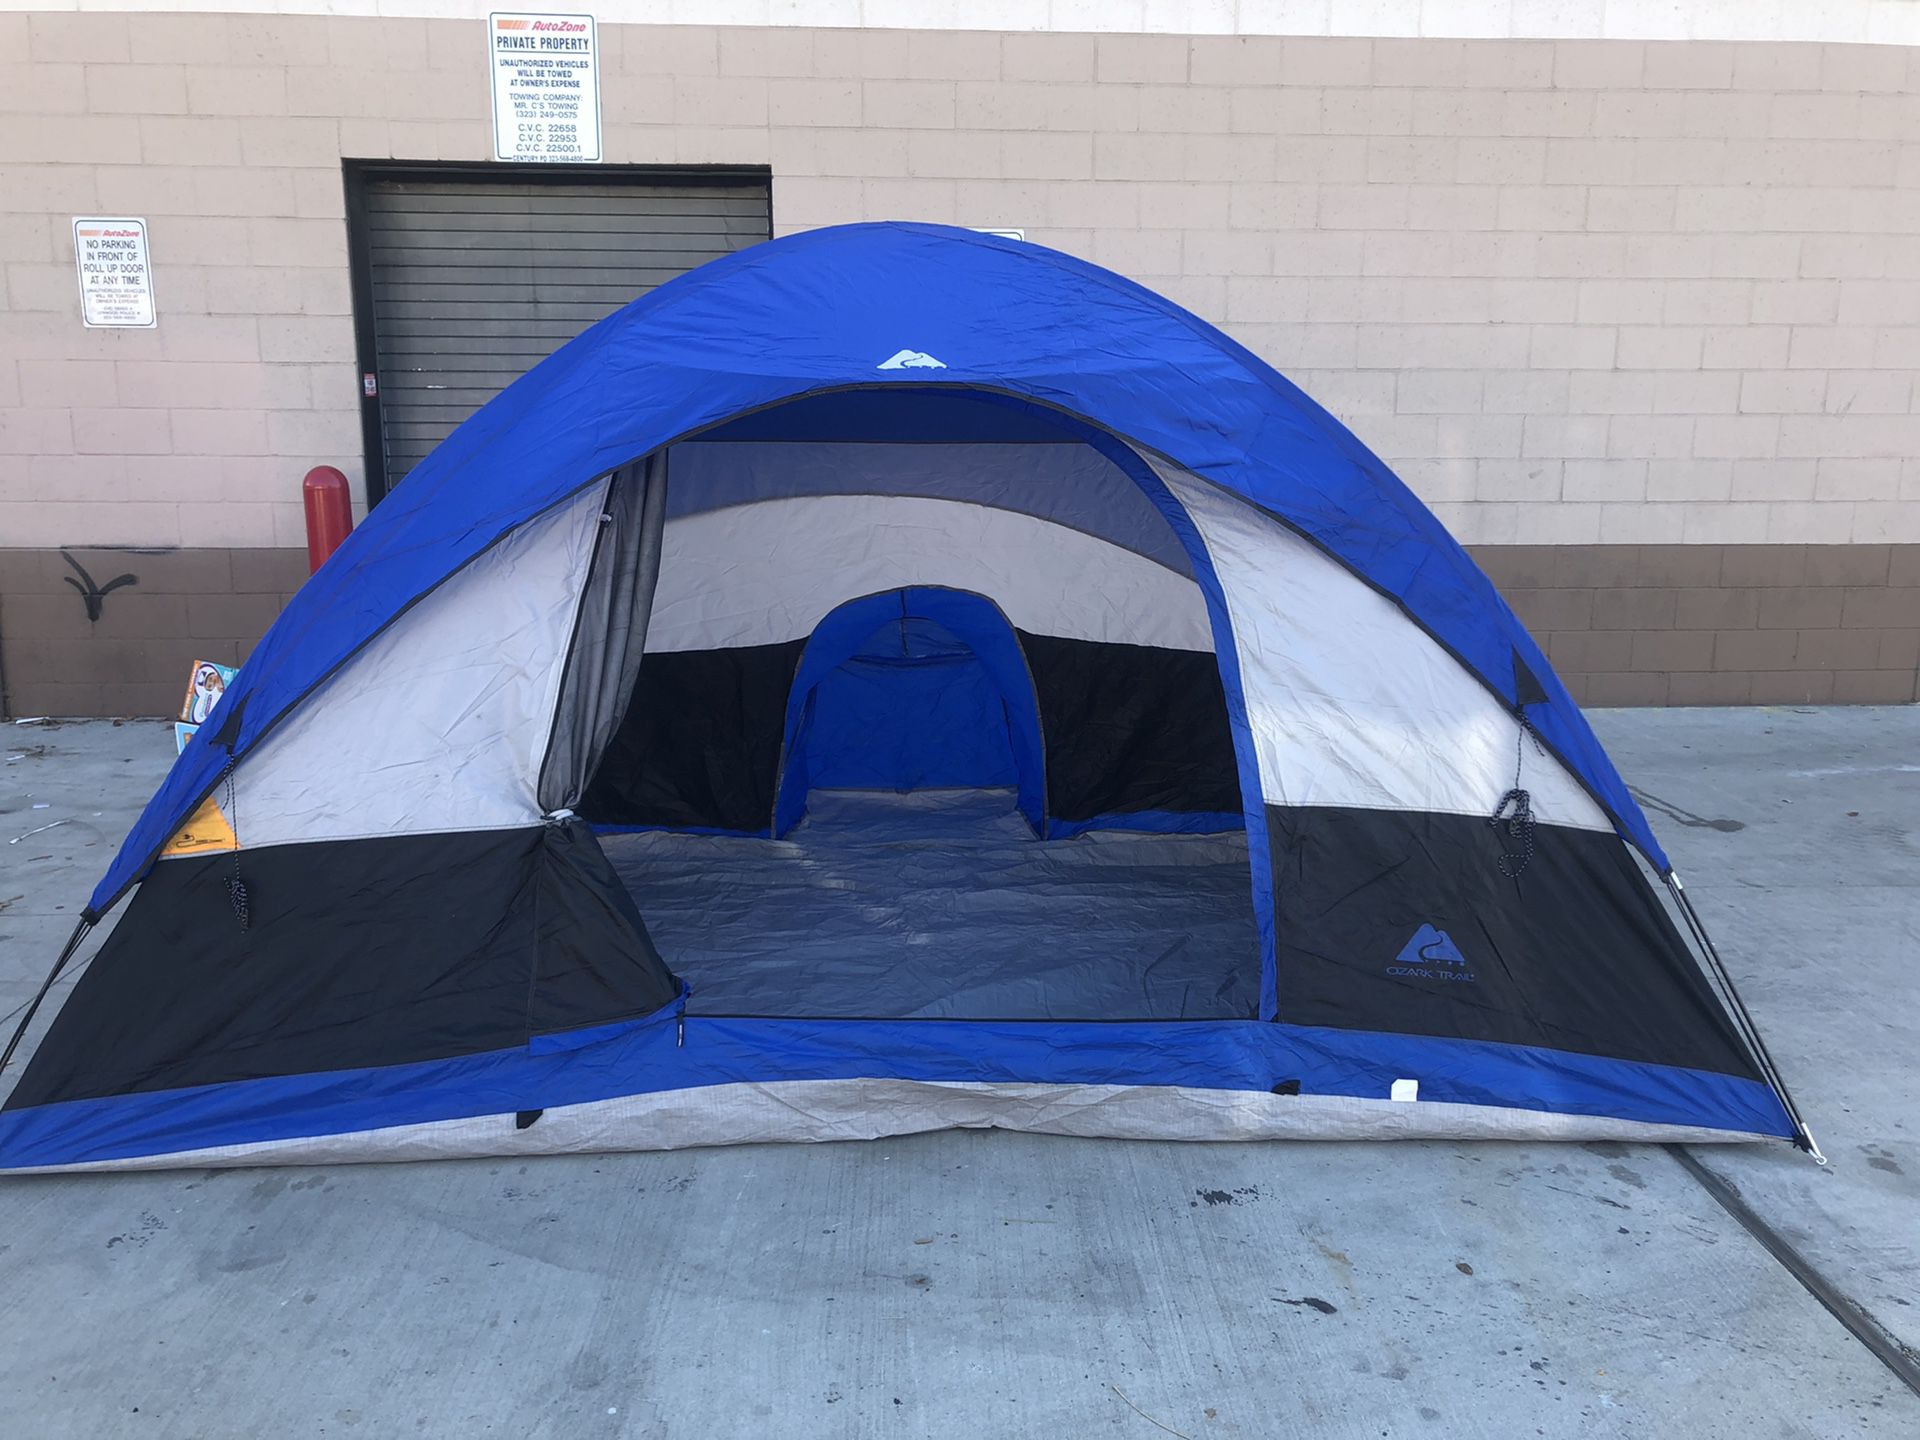 6 person “excellent condition” tent